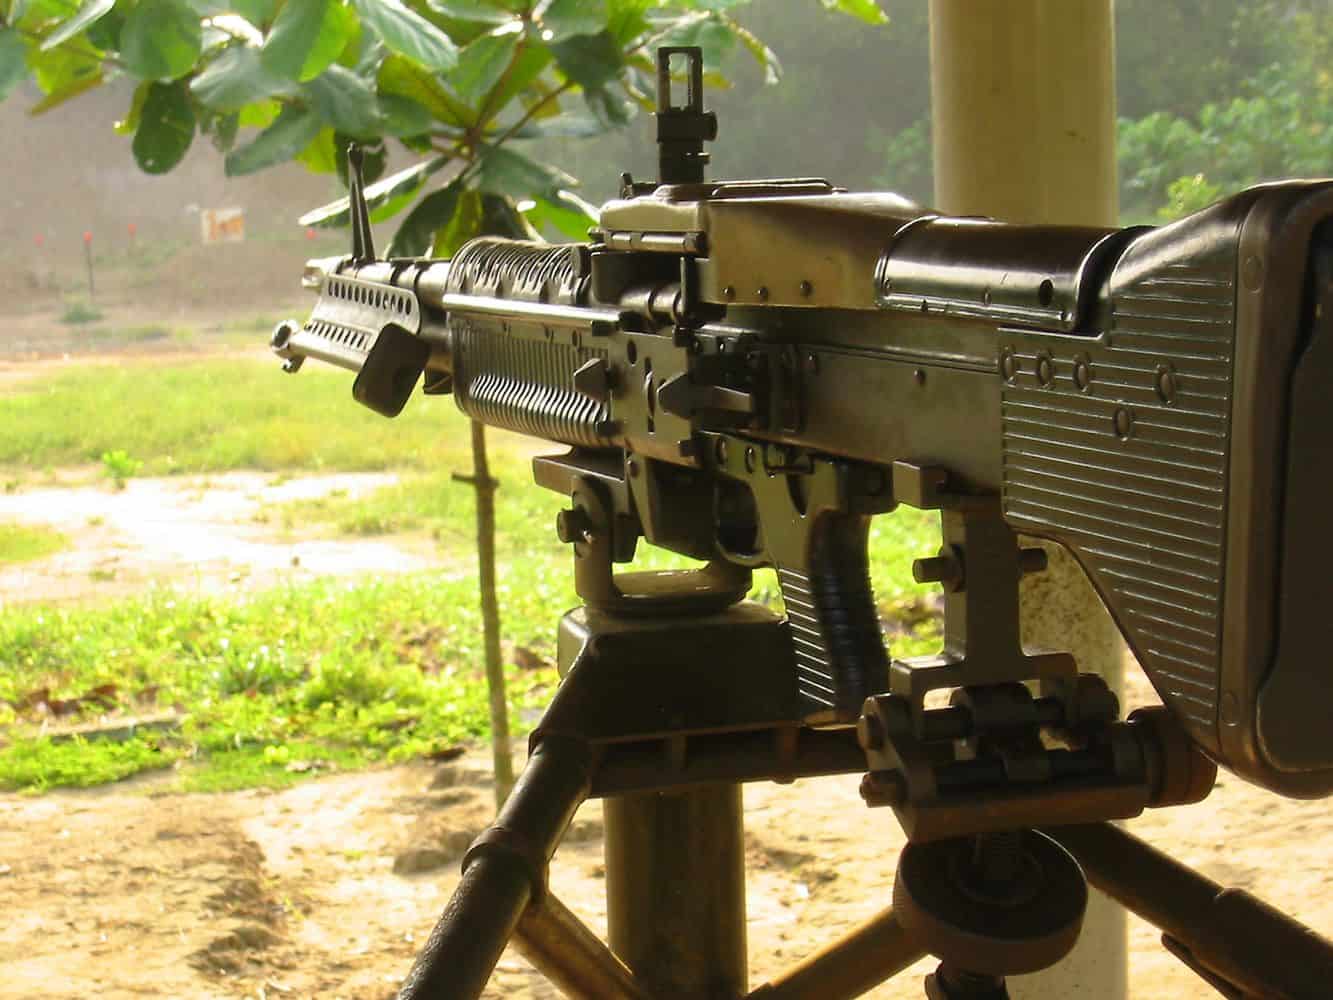 A rifle in a gun range in Georgia